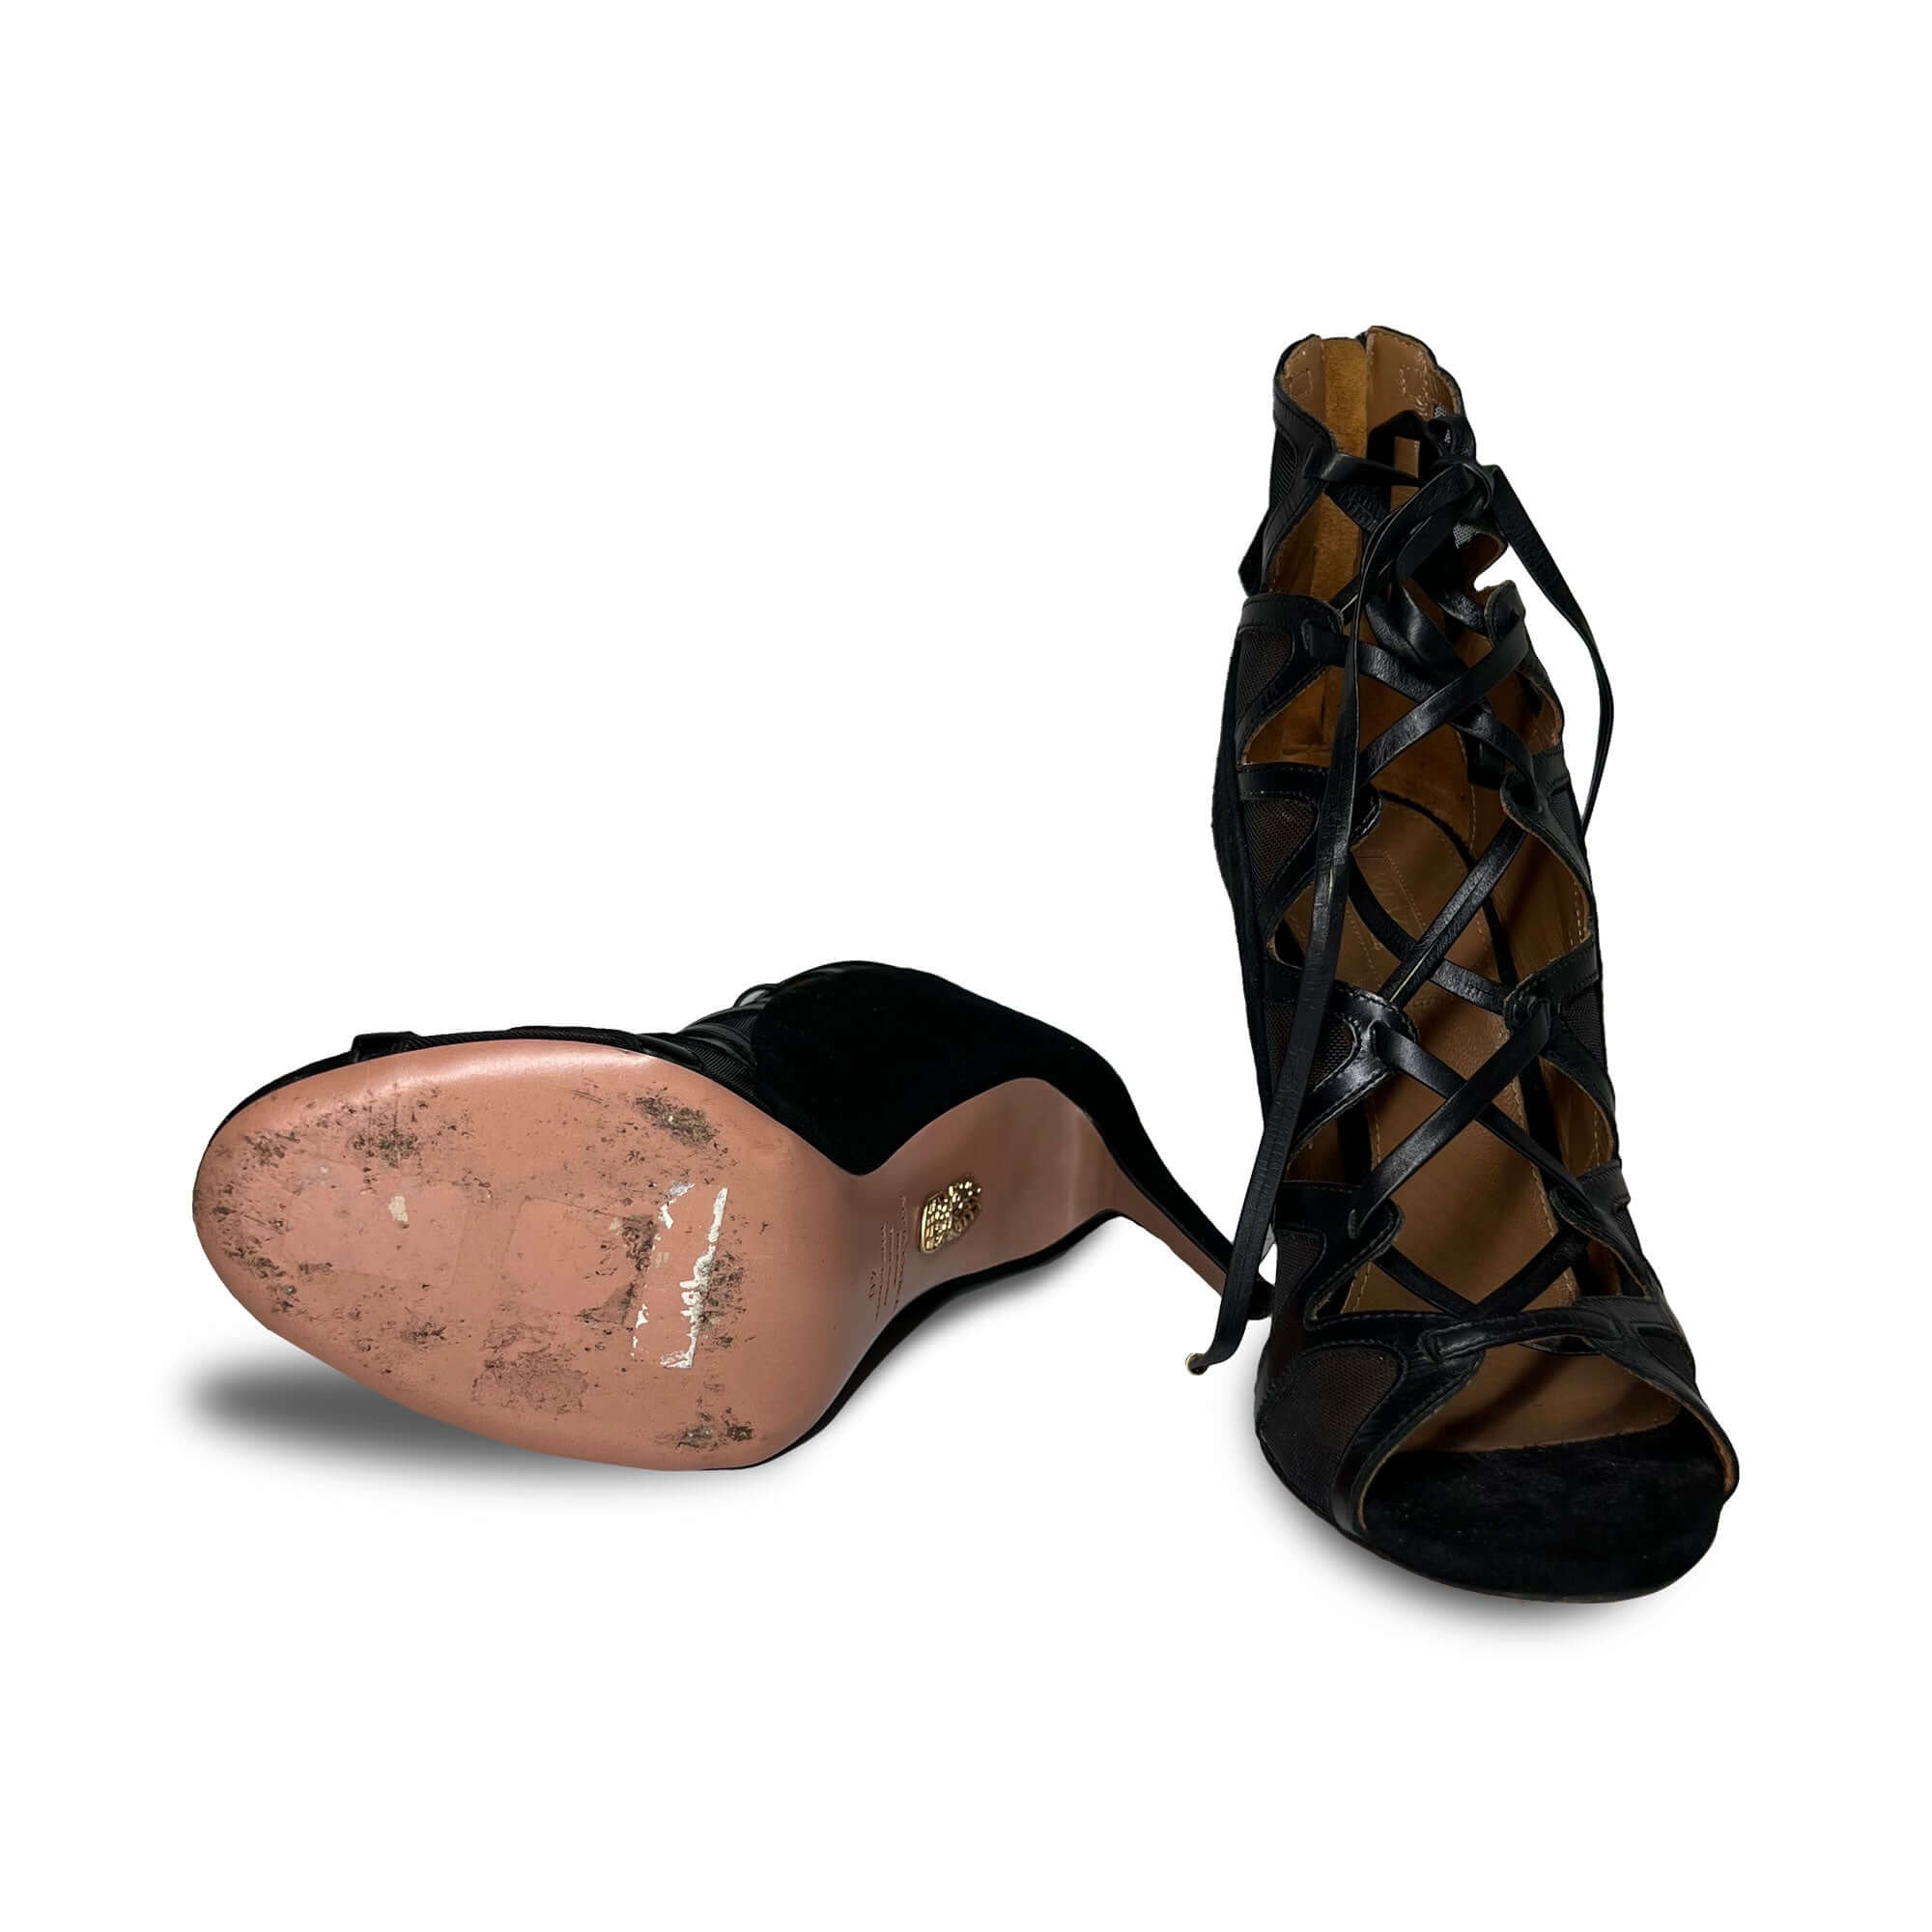 Aquazzura Suede Sandals in Blac